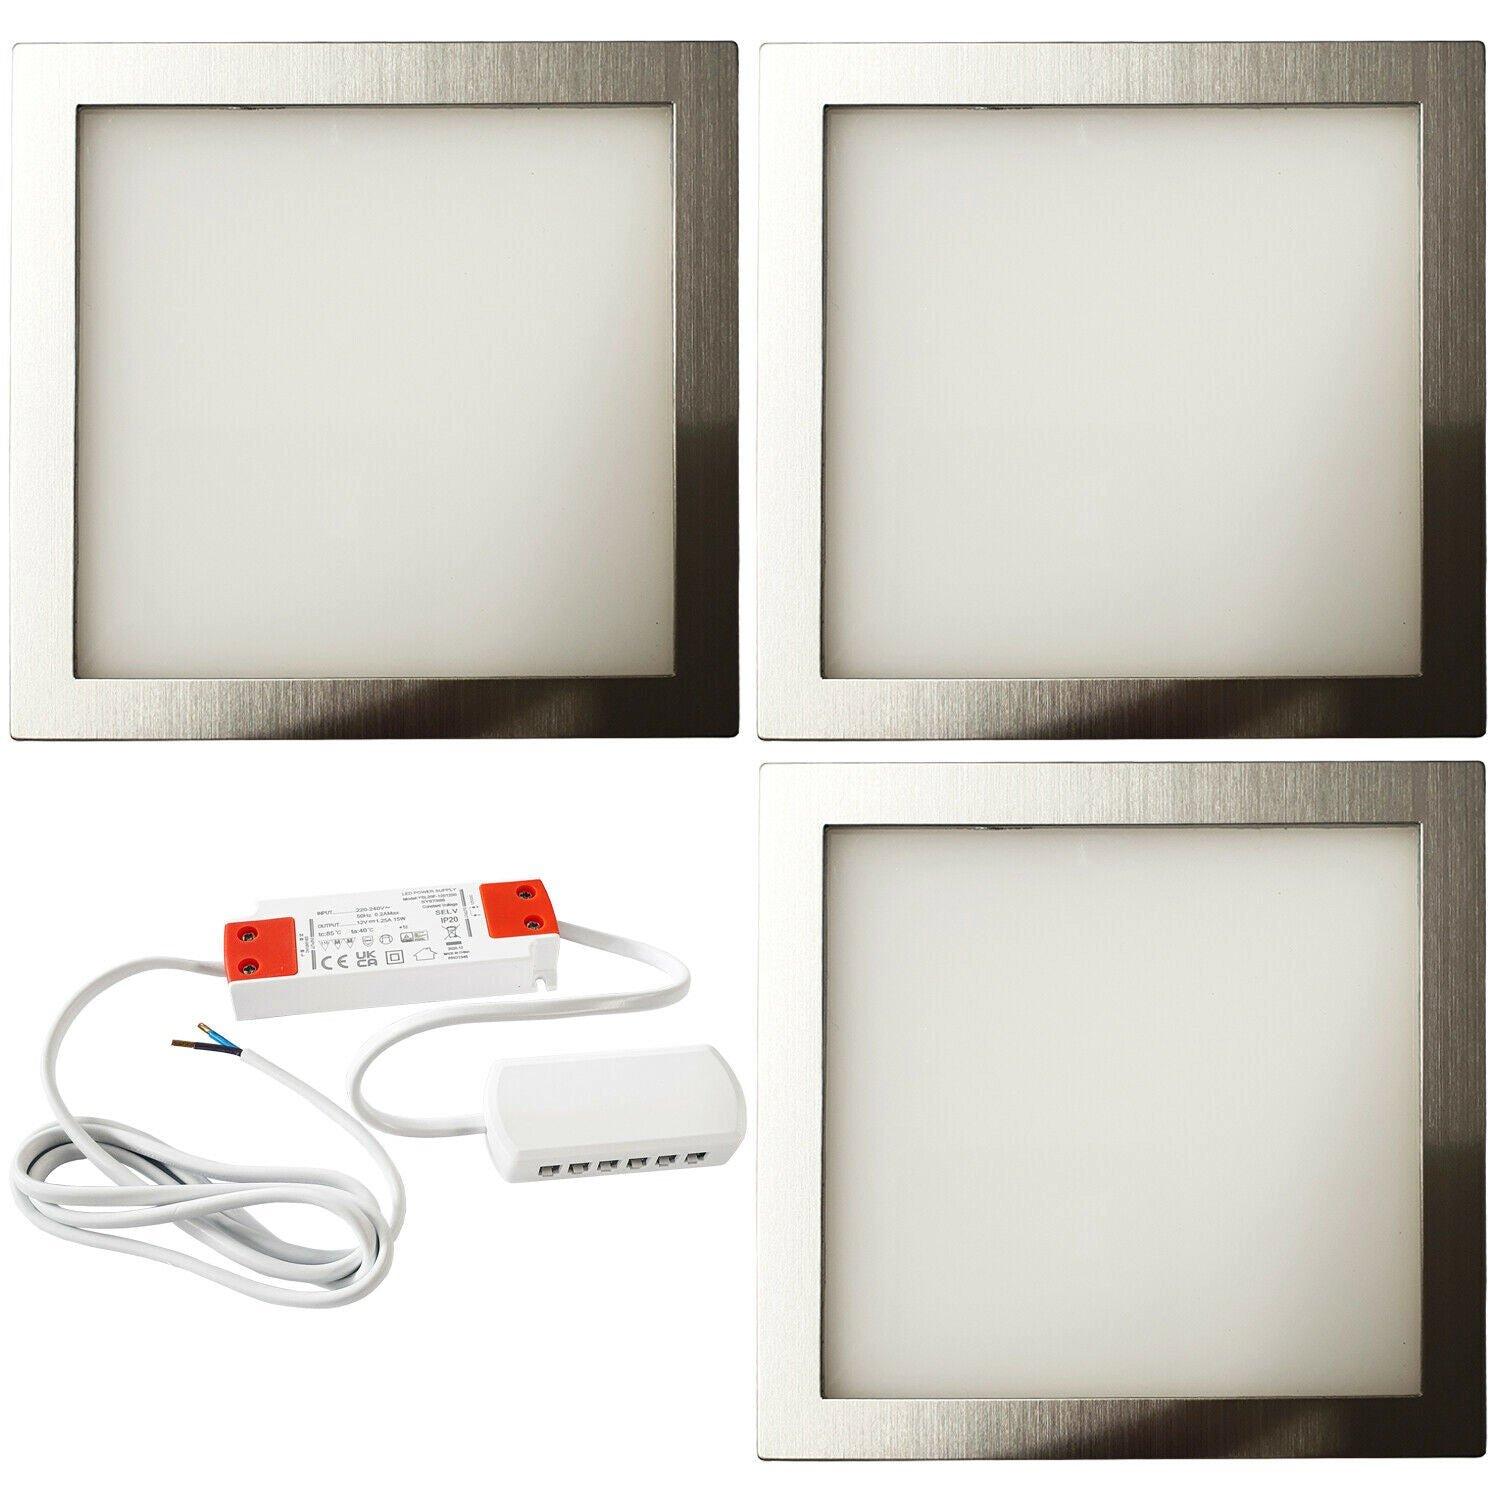 3x BRUSHED NICKEL Ultra-Slim Square Under Cabinet Kitchen Light & Driver Kit - Warm White LED